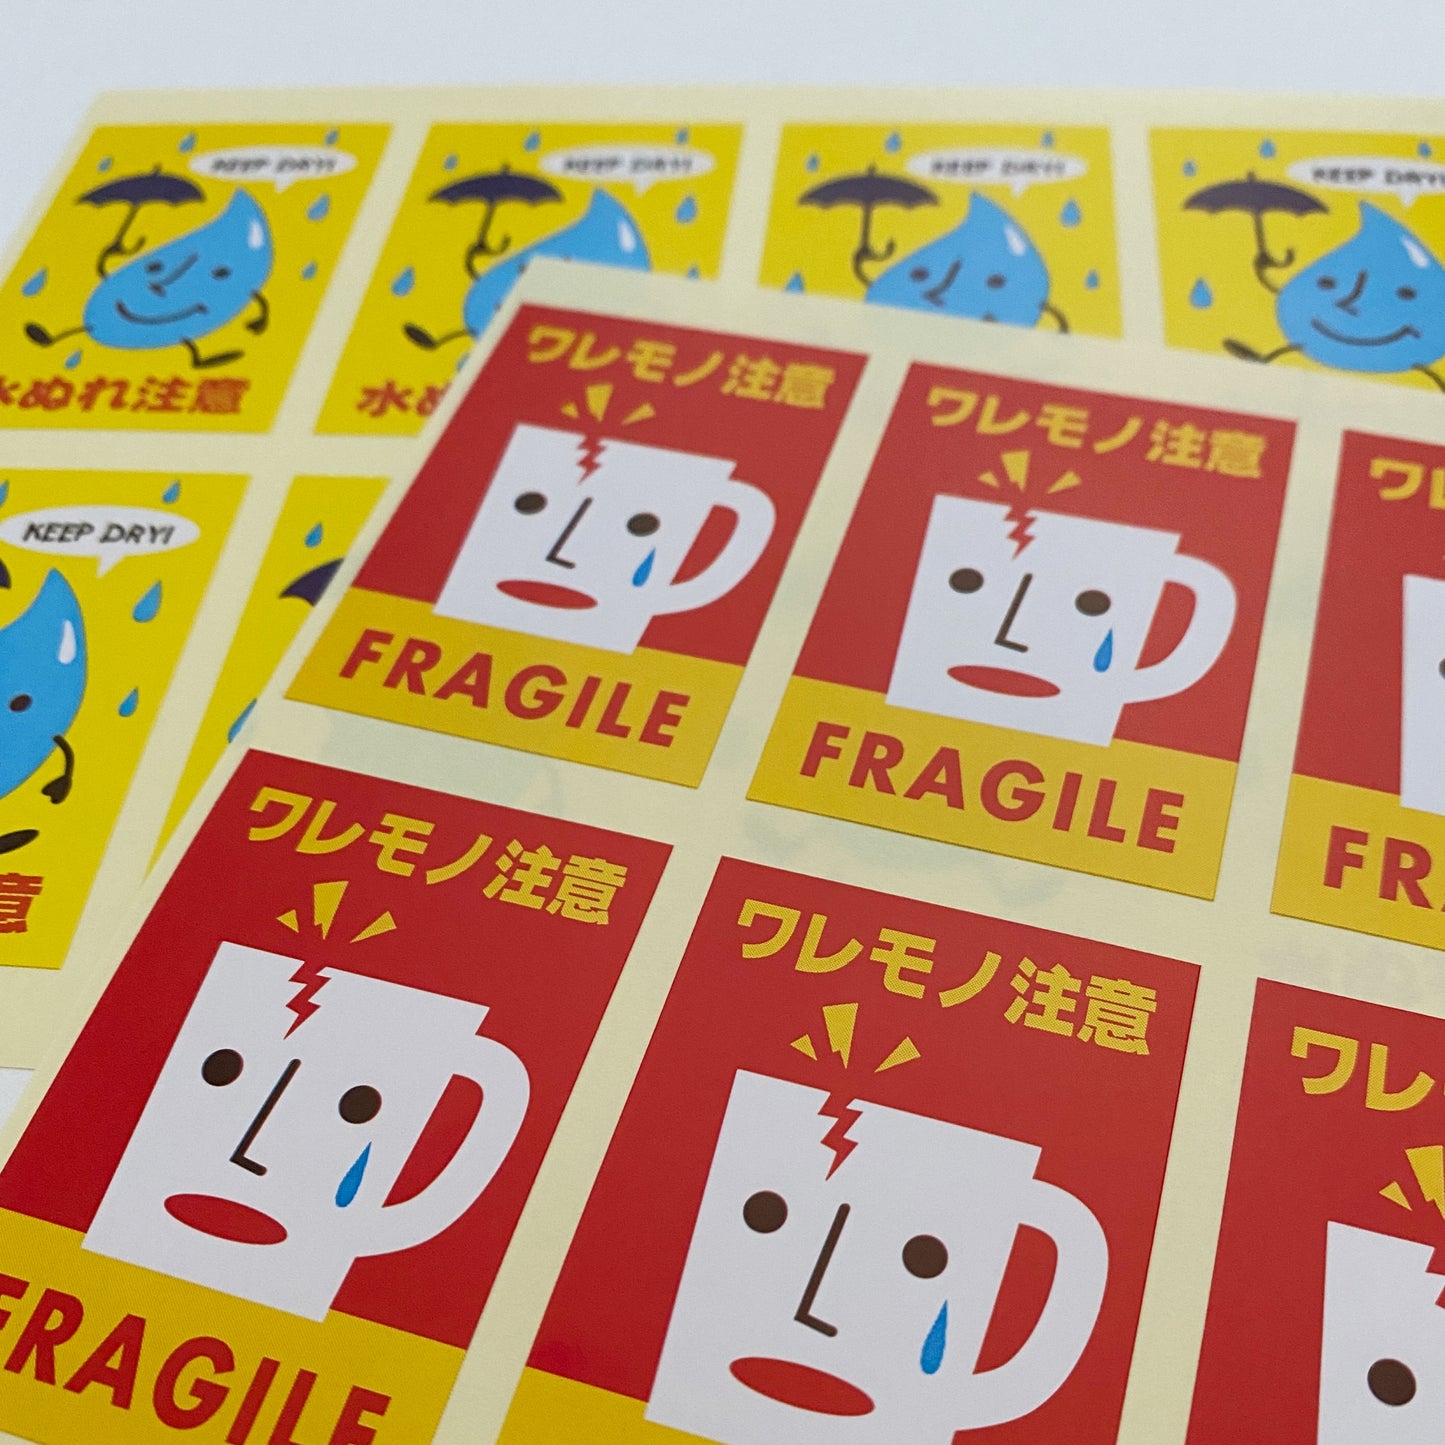 fragile & keep dry sticker pack